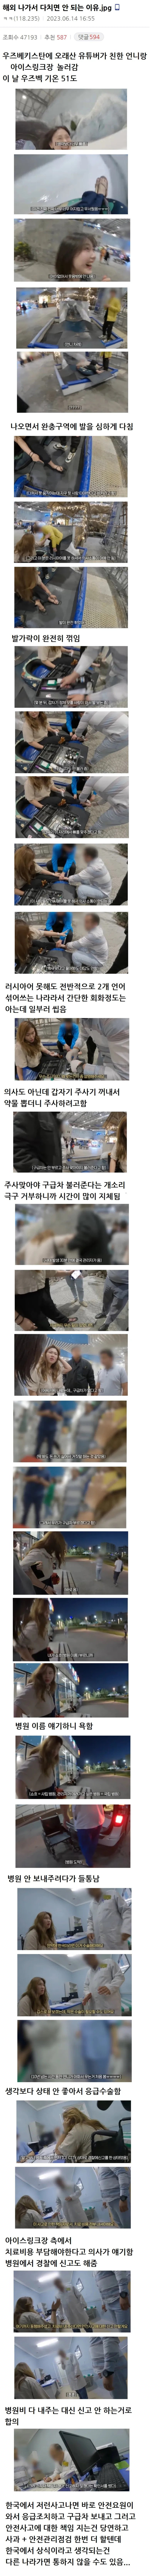 thumb_crop_resize.webp.ren.jpg 한국인이 우즈베키스탄 아이스링크장에서 다쳤는데 관계자에게 욕먹음 ㄷㄷㄷ...JPG